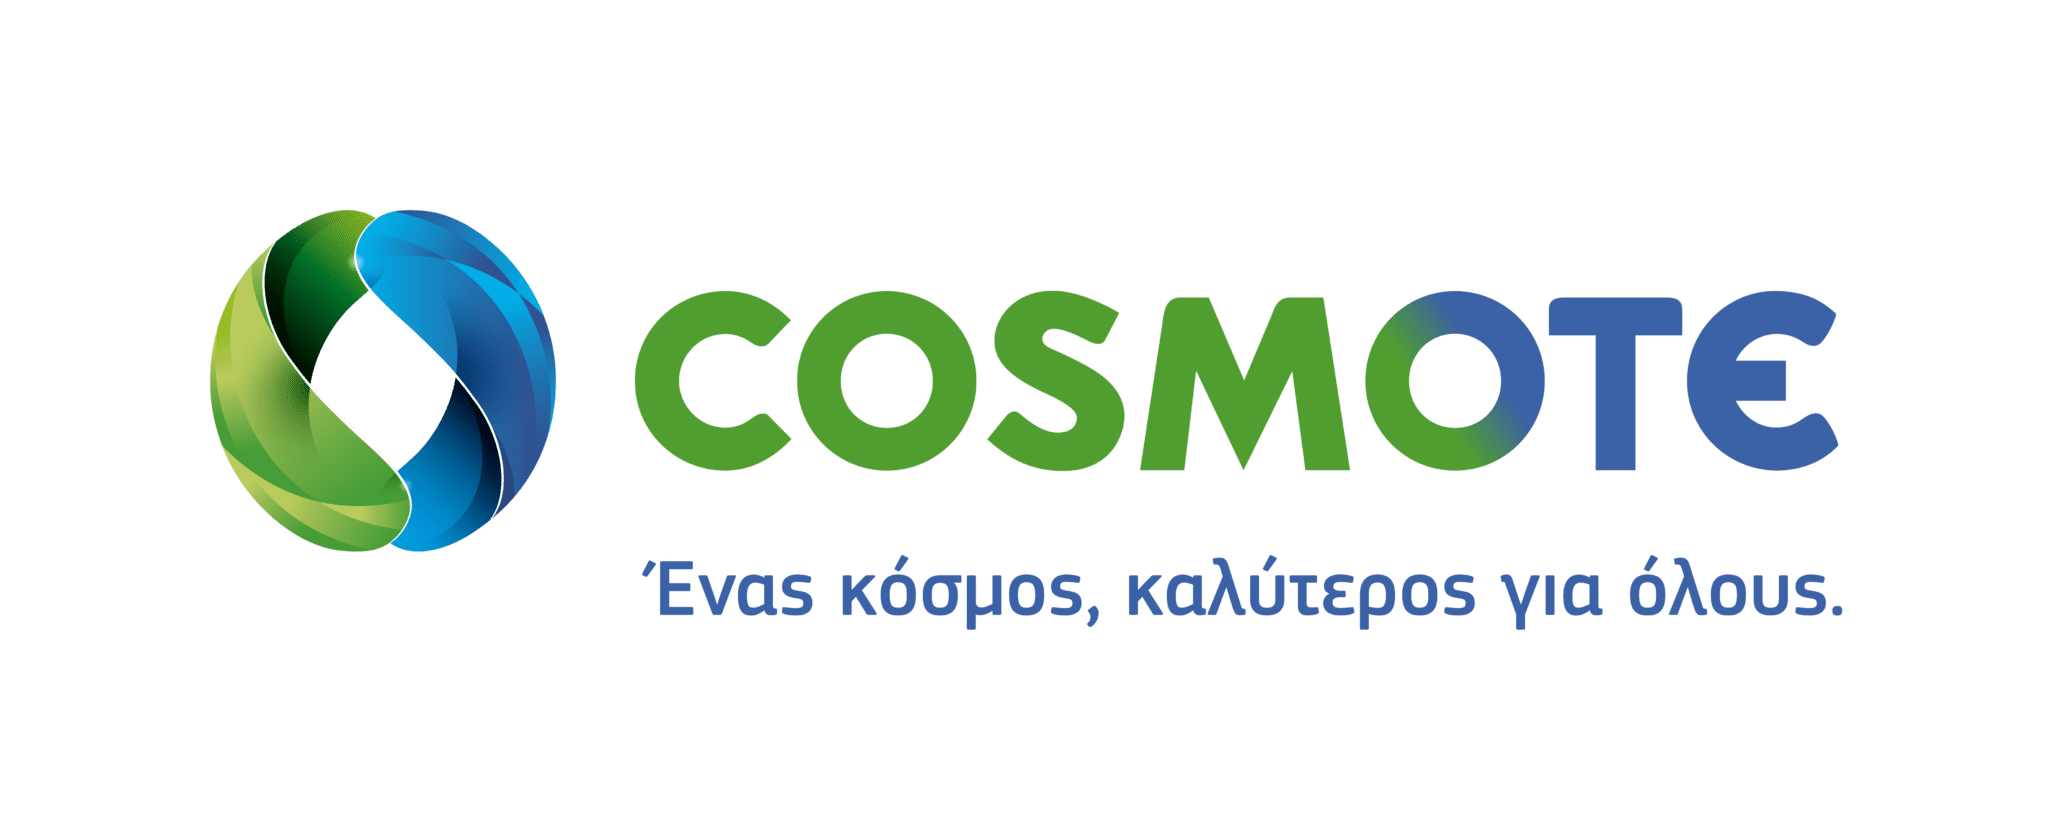 COSMOTE Logo